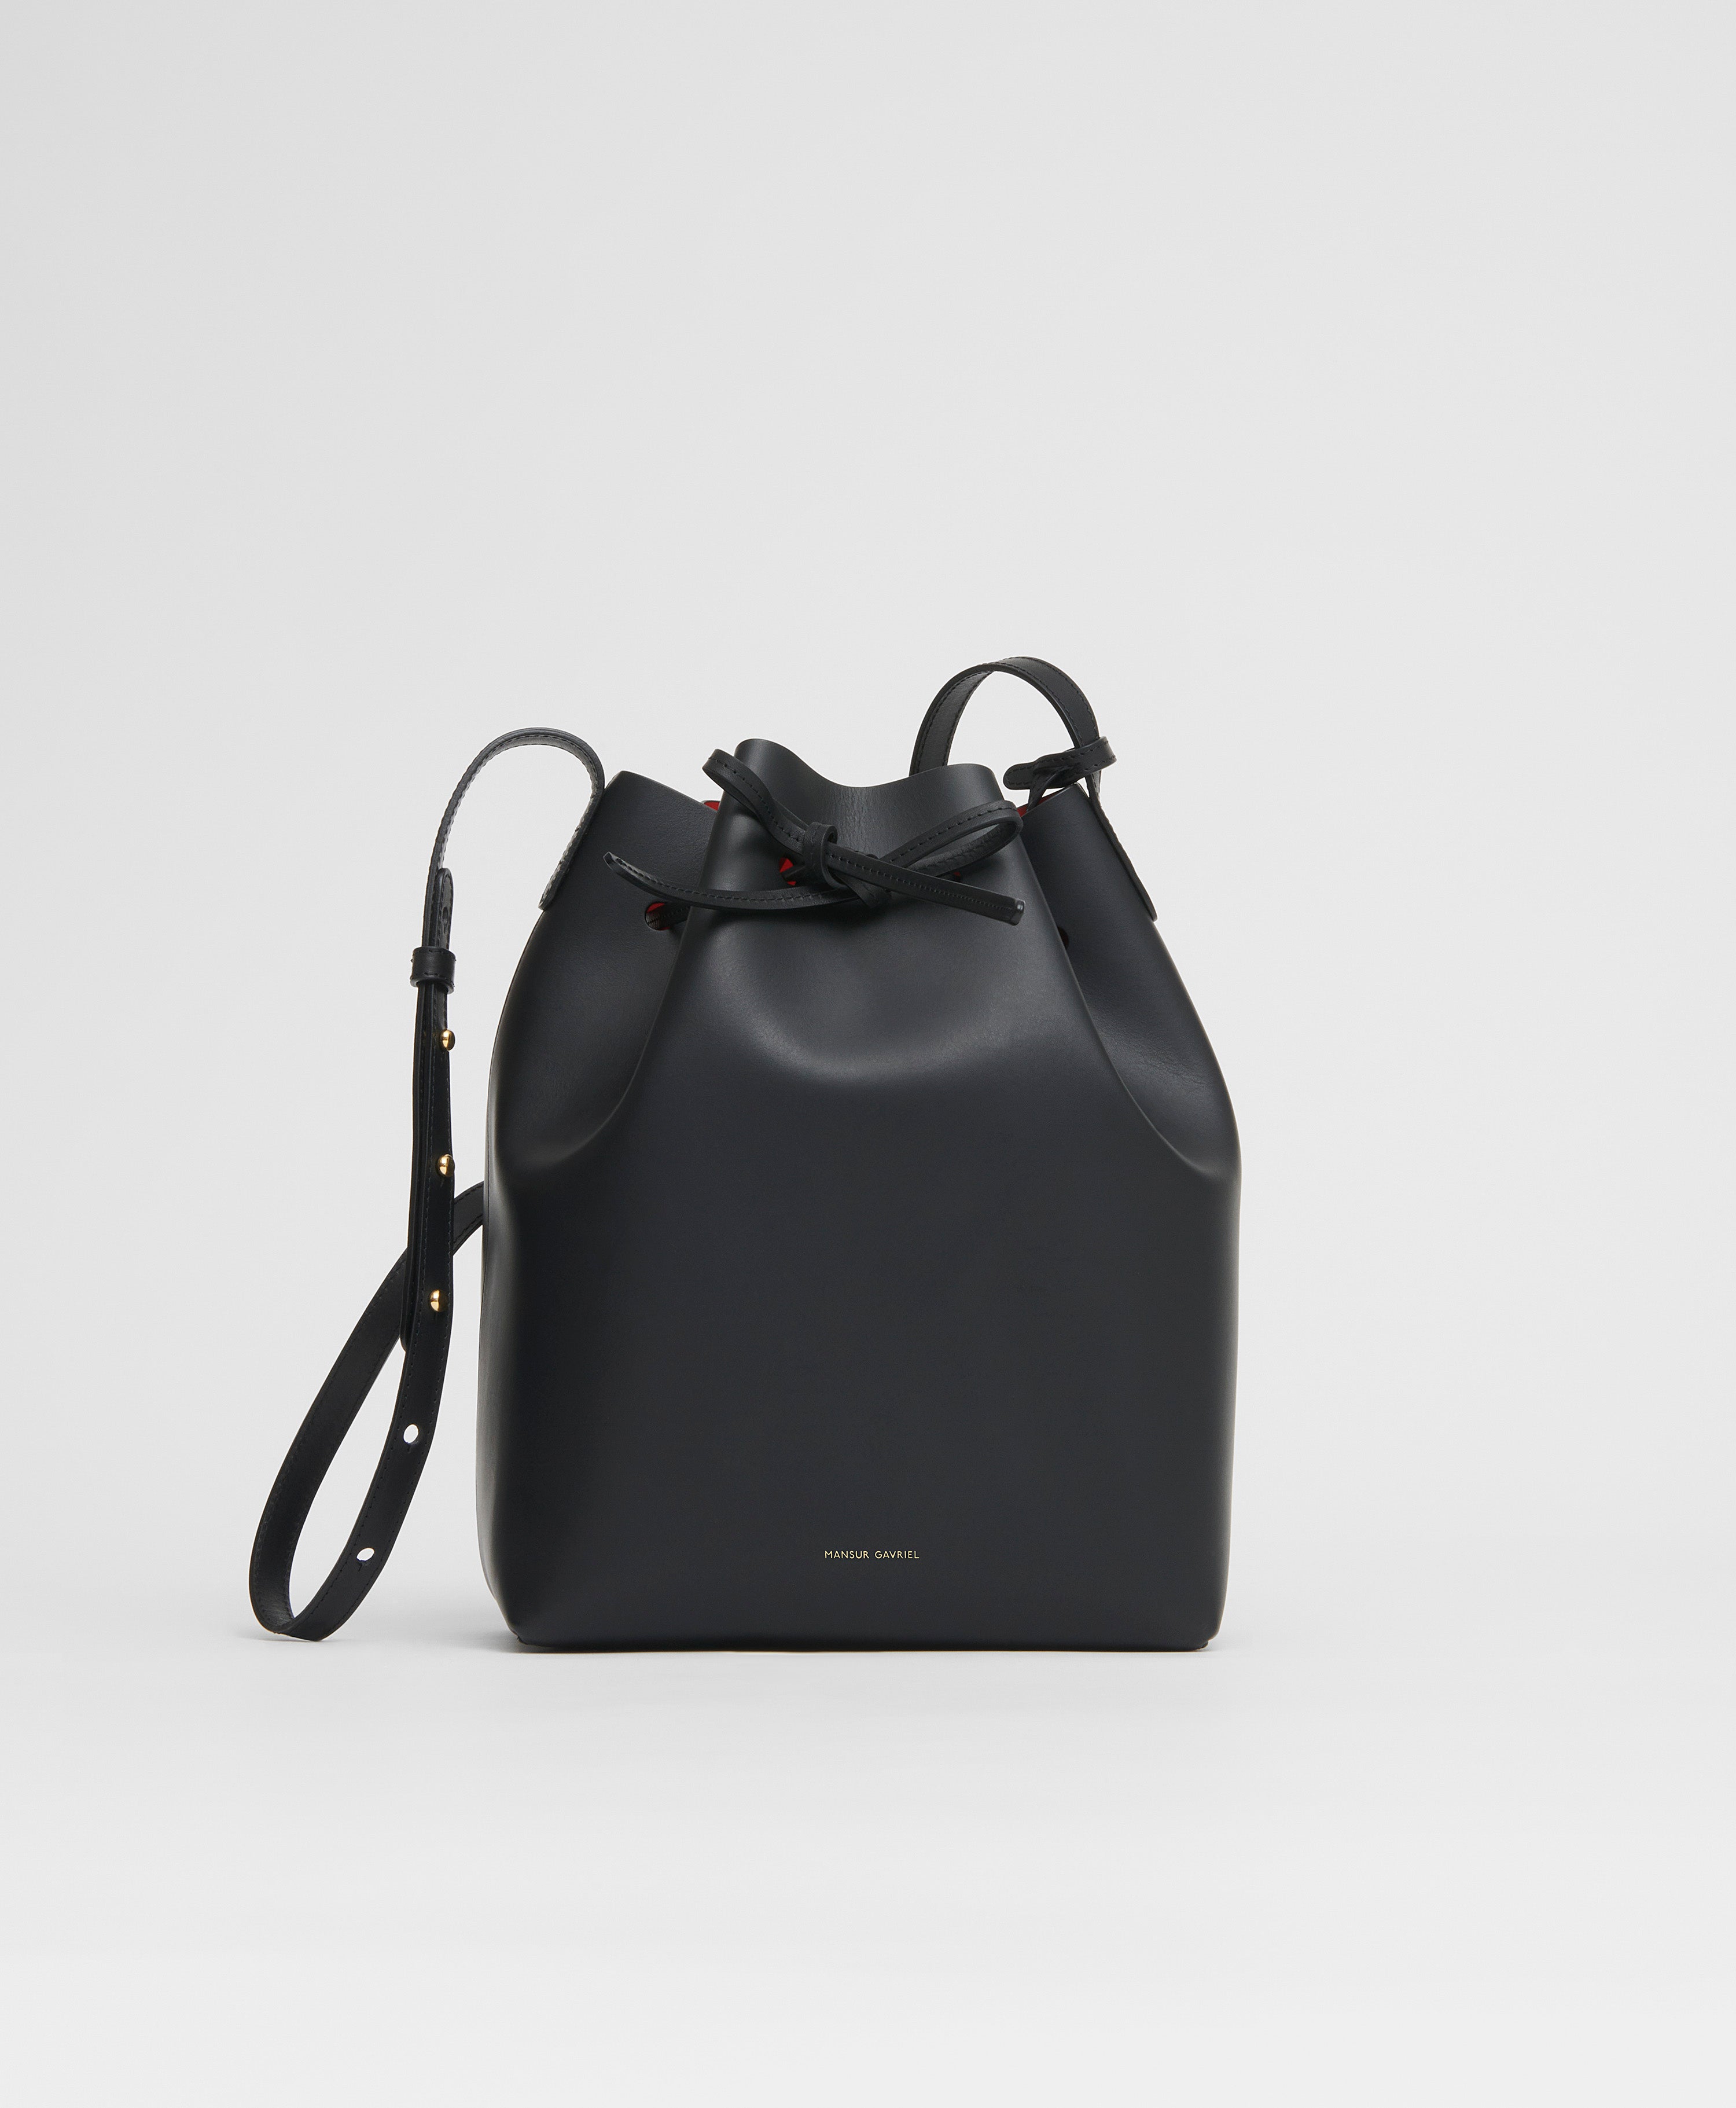 Mansur Gavriel Soft Candy Bag in Black/Flamma – Hampden Clothing